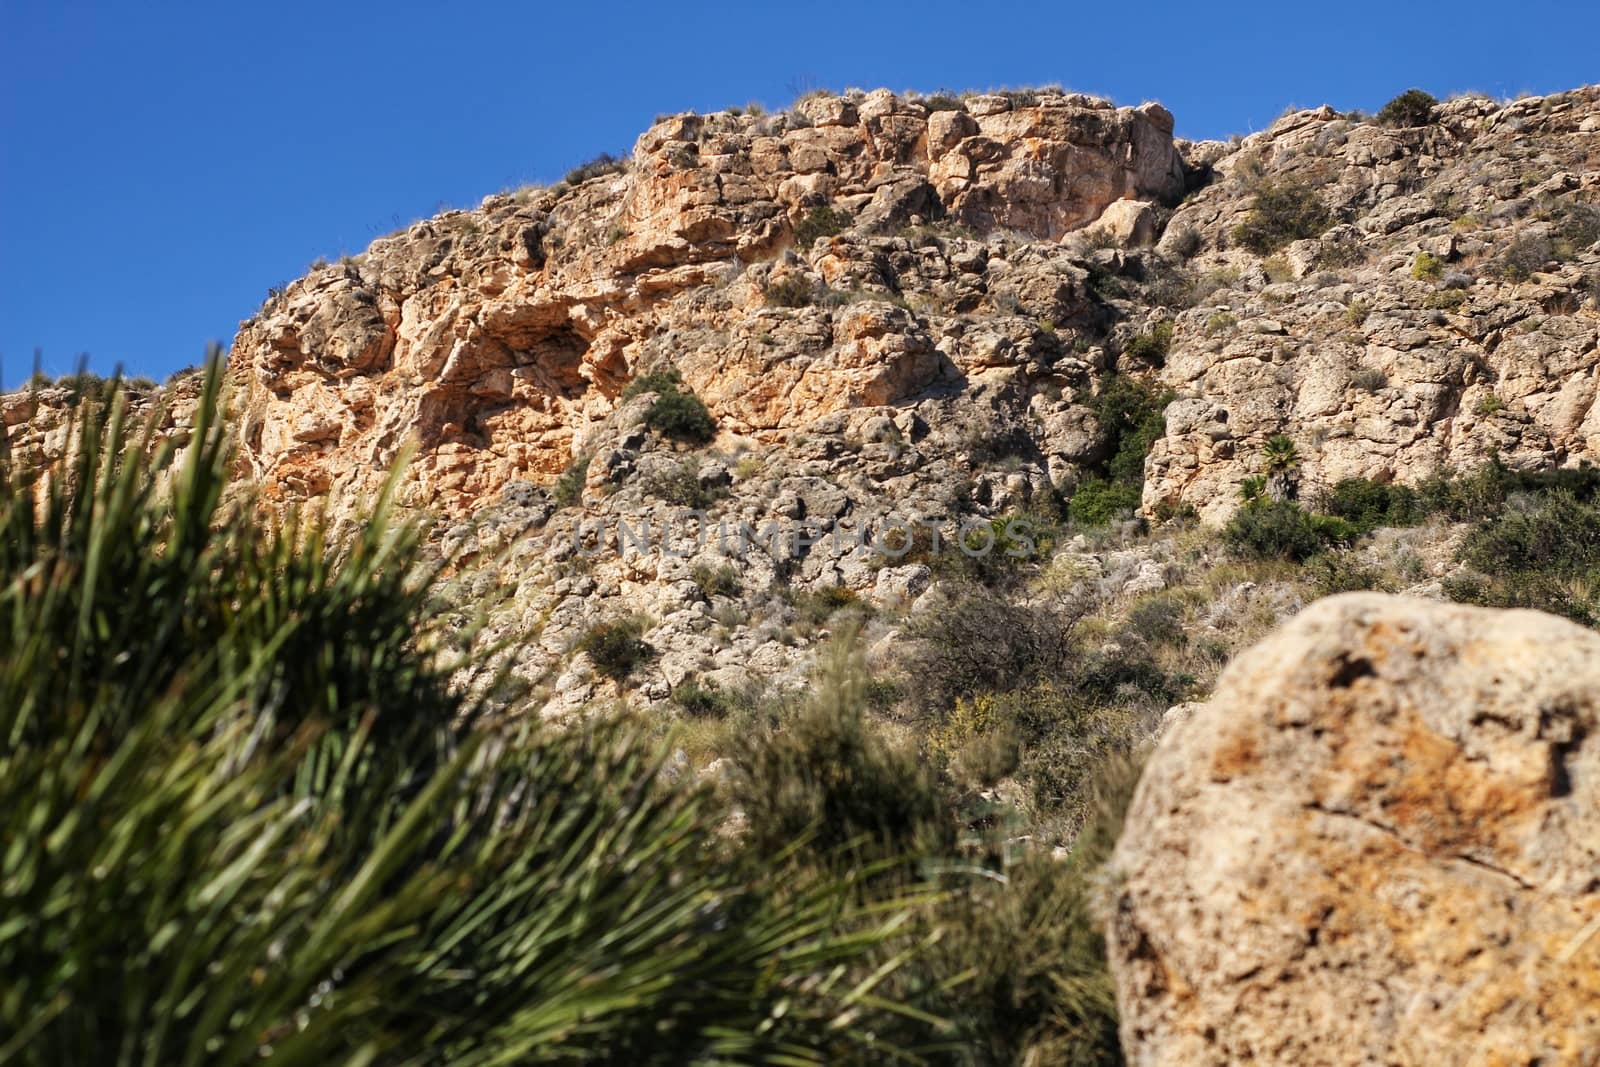 Vegetation in cliffs of the Alicante coast